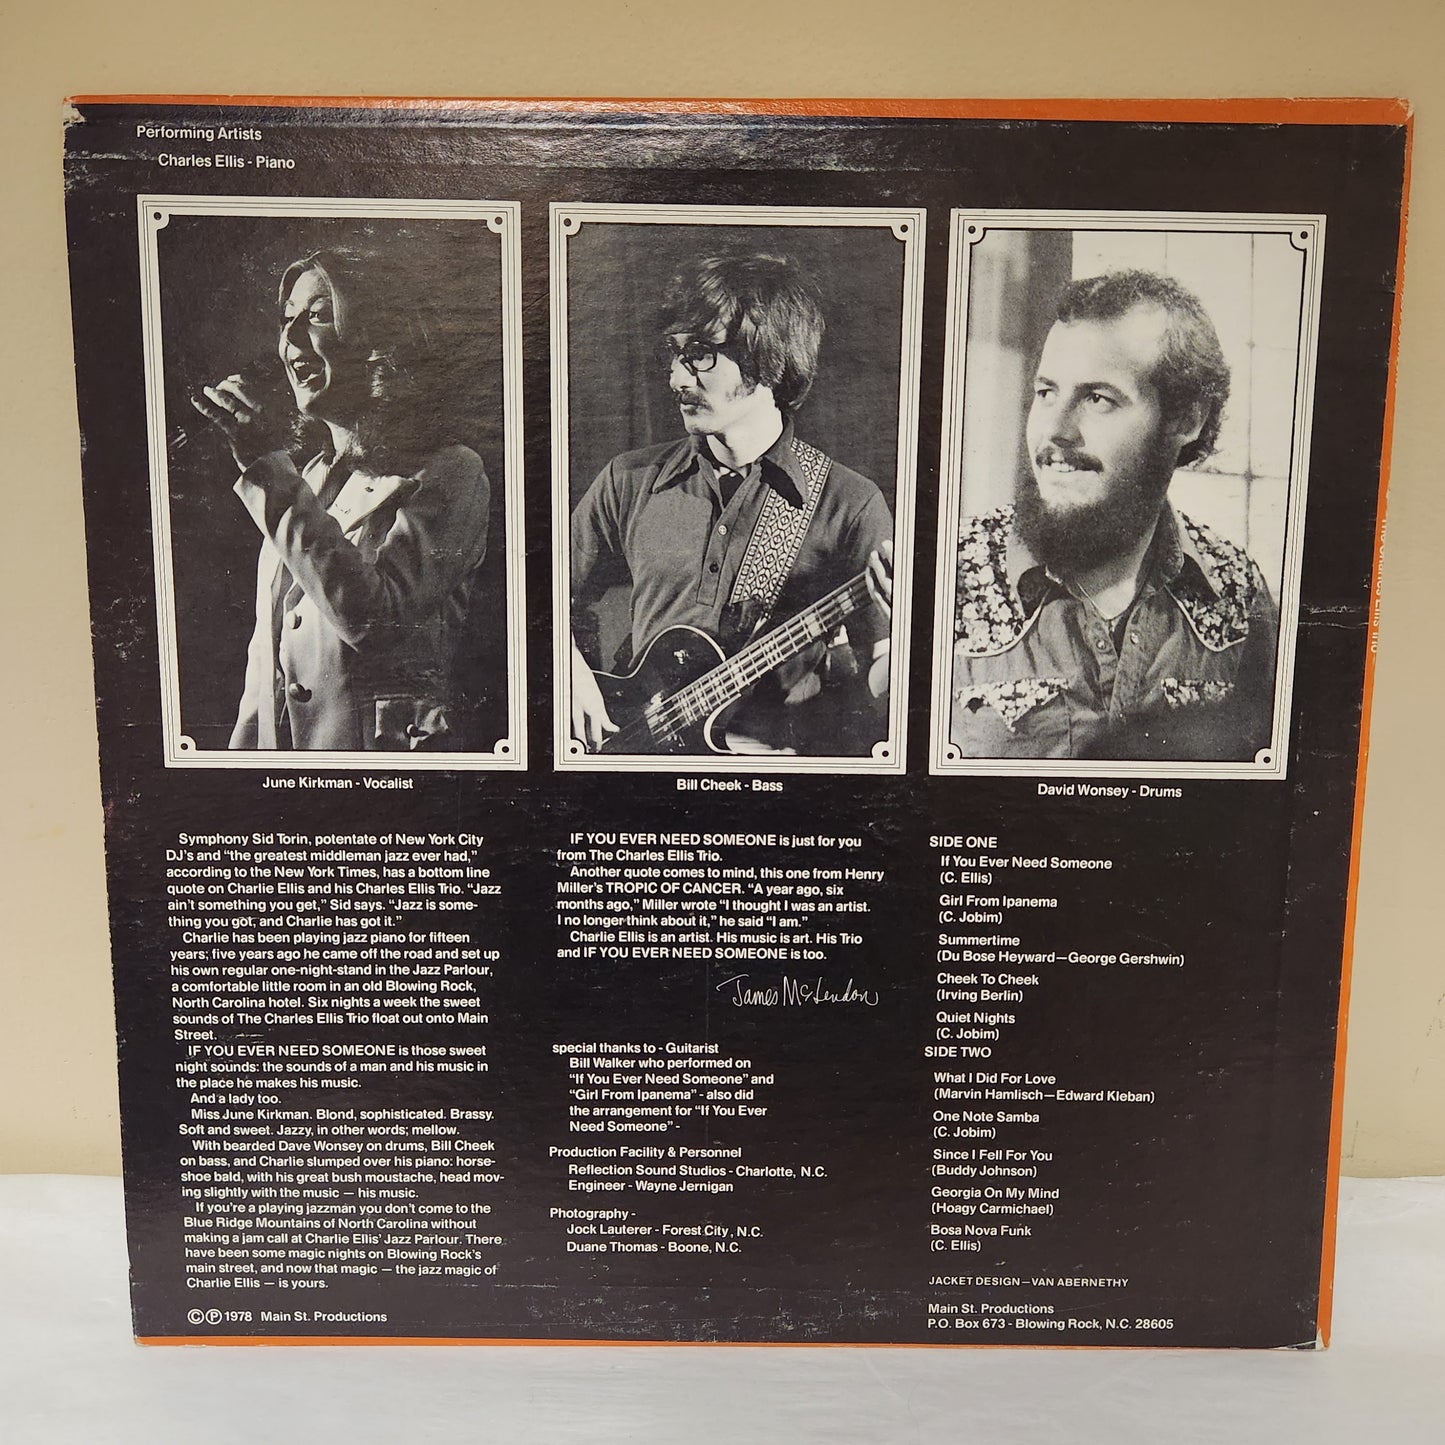 Rare The Charles Ellis Trio "If You Ever Need Someone" 1970's Jazz Album